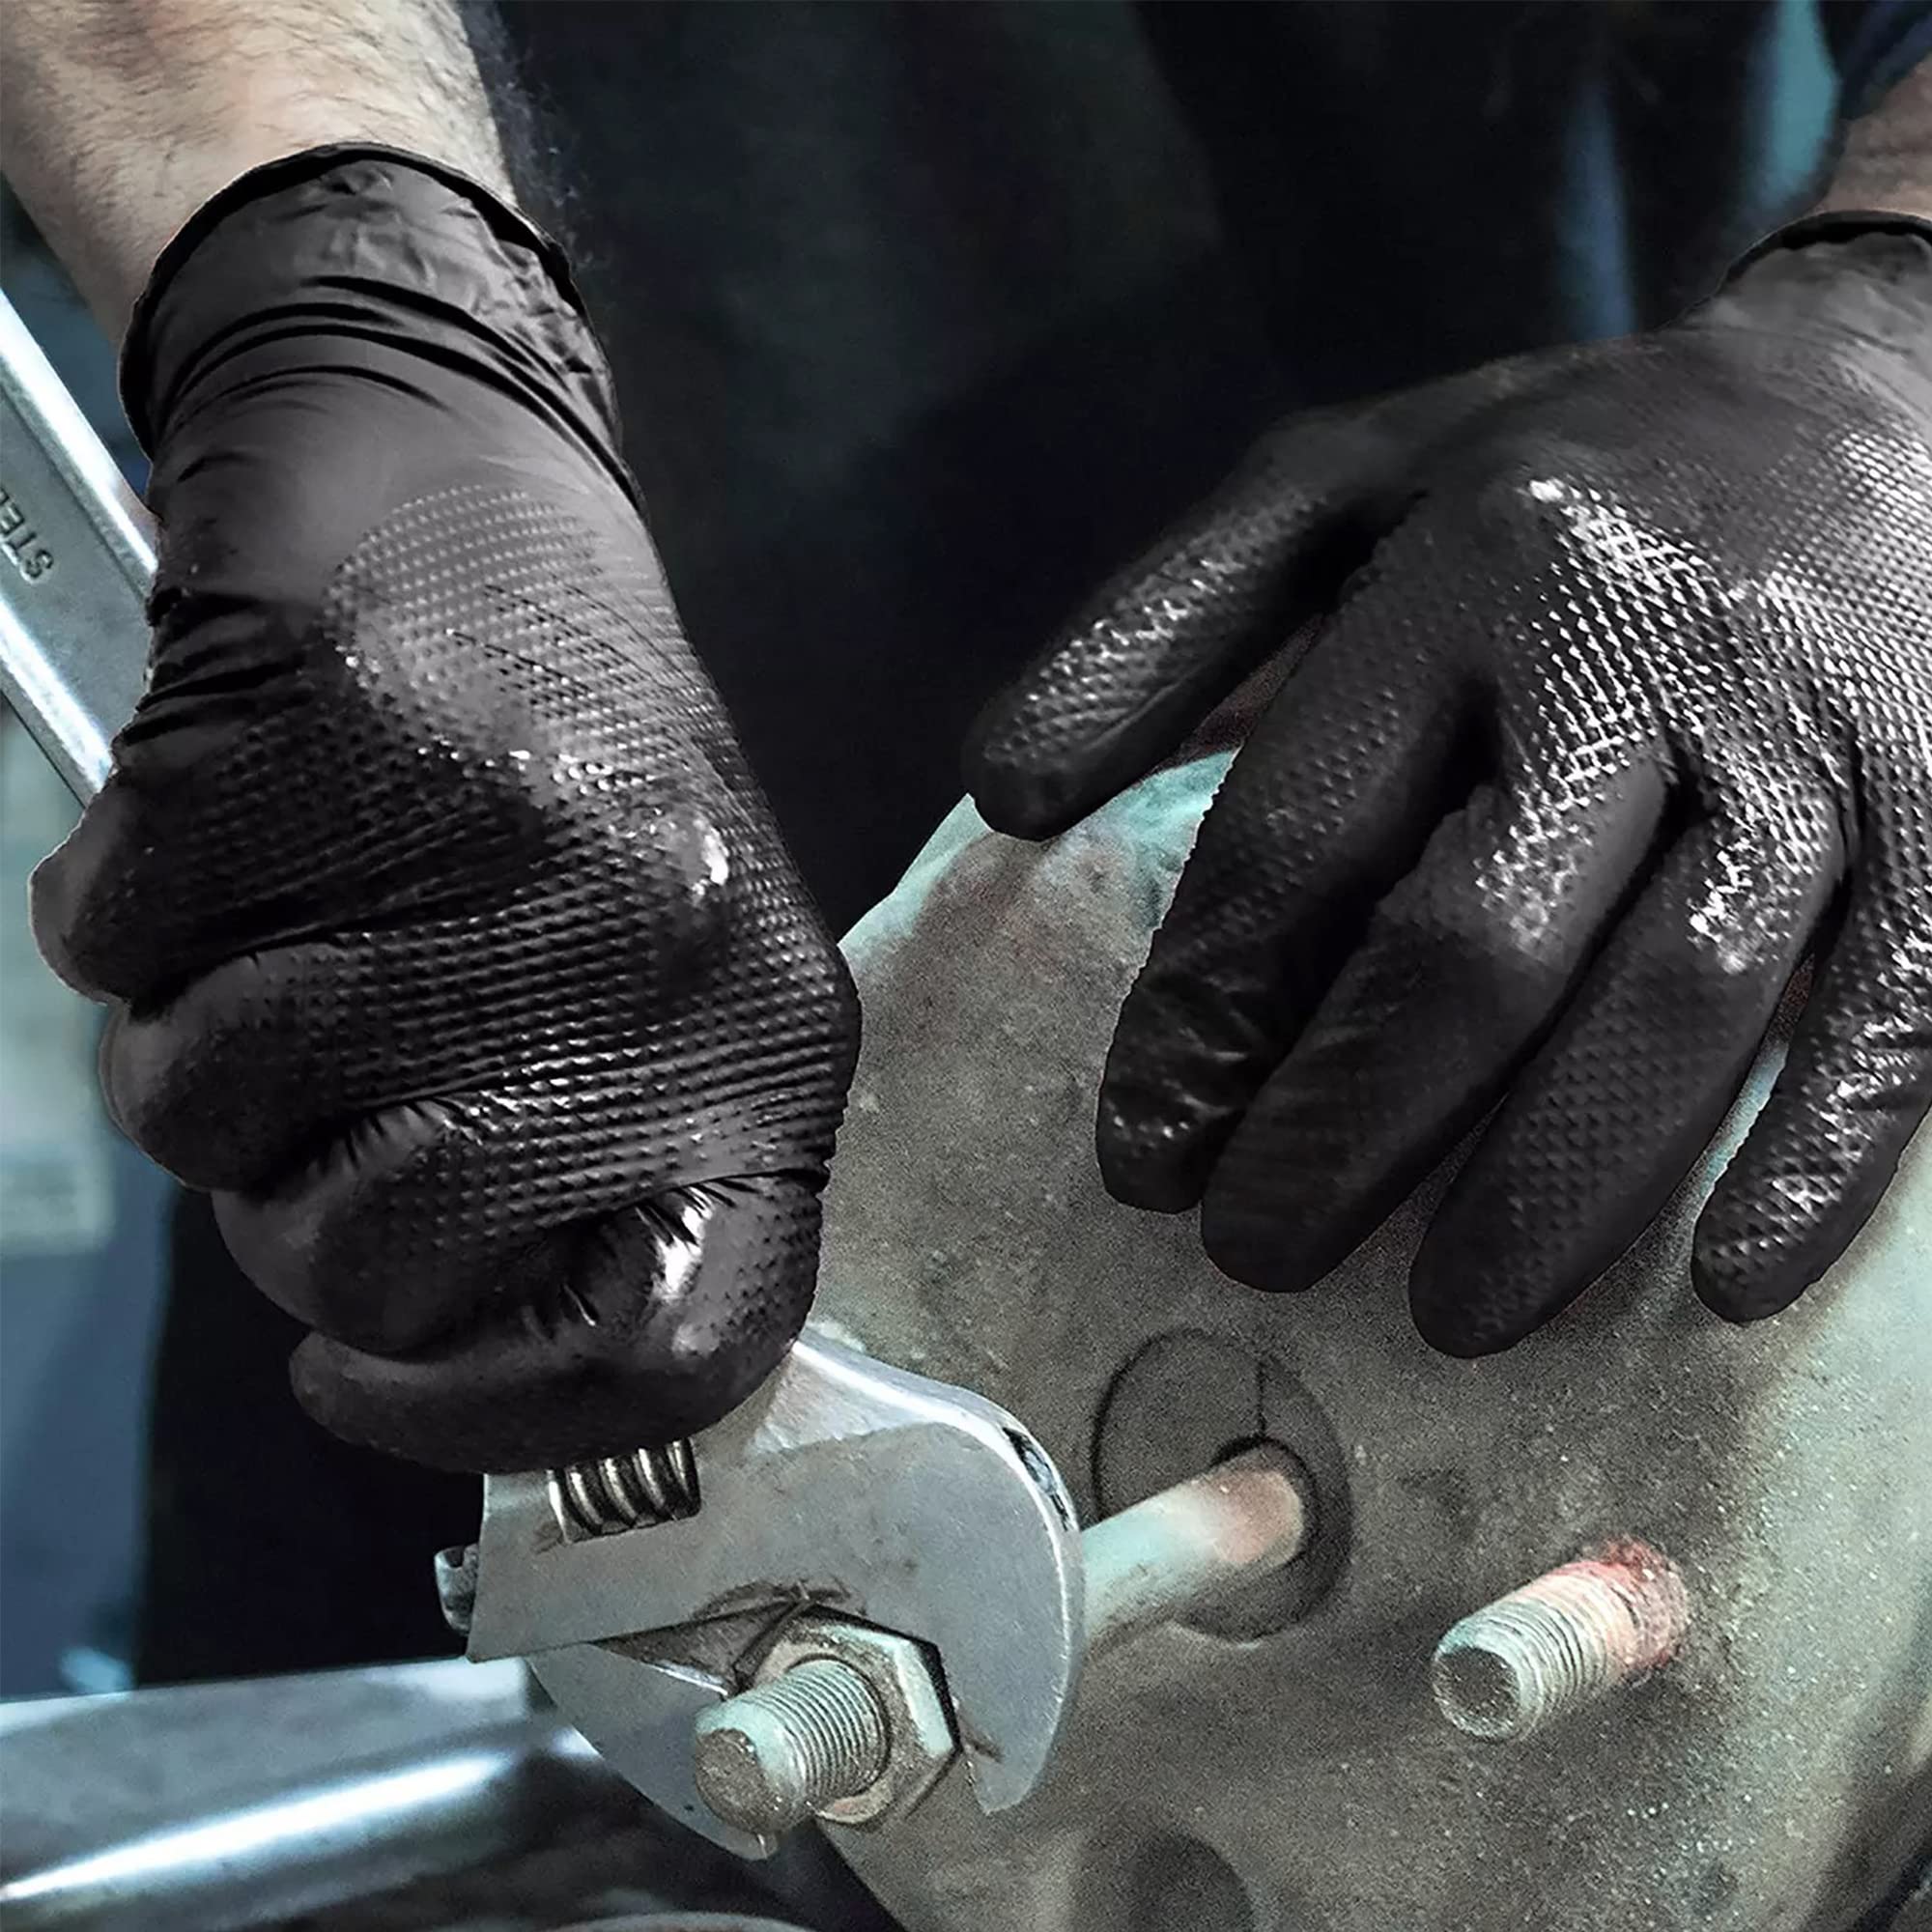 TITANflex Thor Grip Heavy Duty Black Industrial Nitrile Gloves, 8-mil, XL, Box of 100, Latex Free, Raised Diamond Texture, Powder Free, Food Safe, Rubber Gloves, Mechanic Gloves